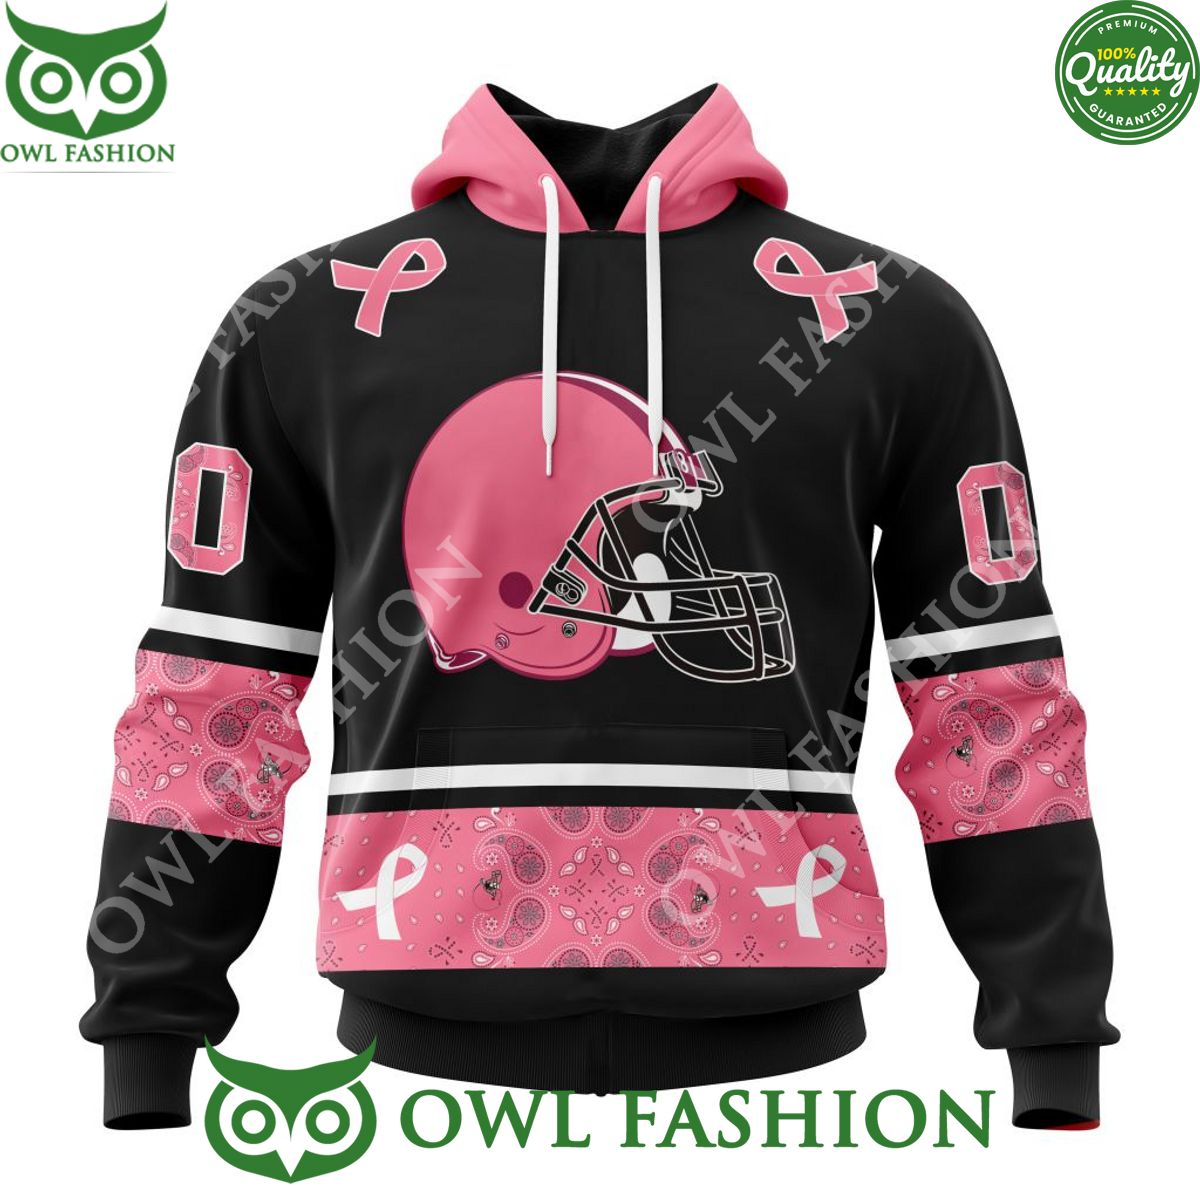 customized nfl cleveland browns pink breast cancer 3d hoodie shirt 1 ubndv.jpg